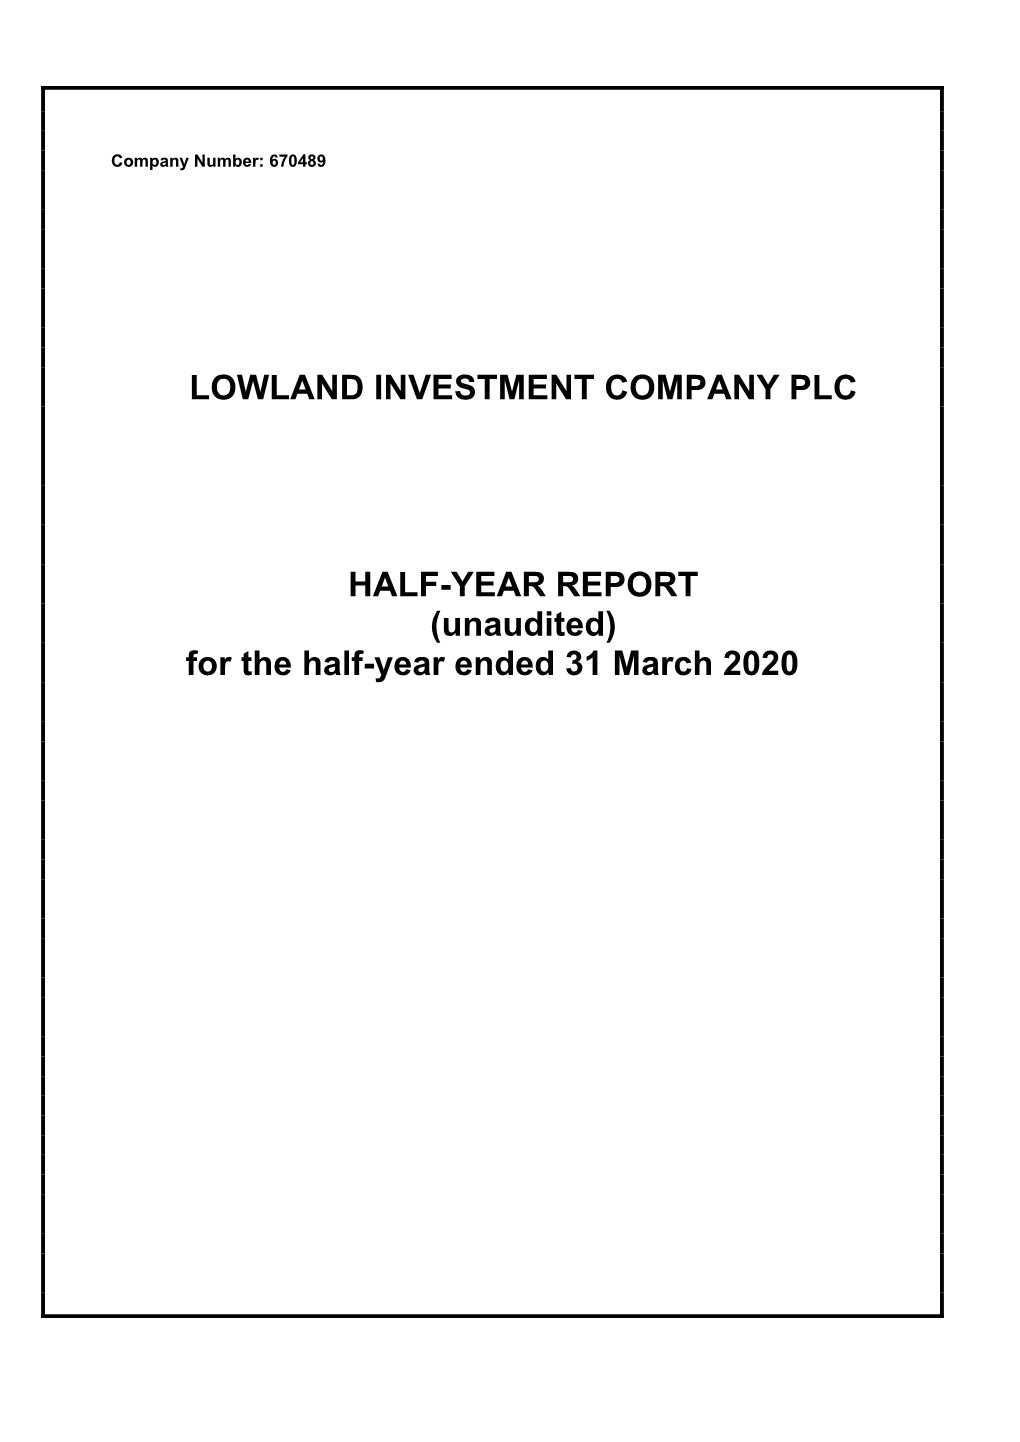 Lowland Investment Company Plc Half